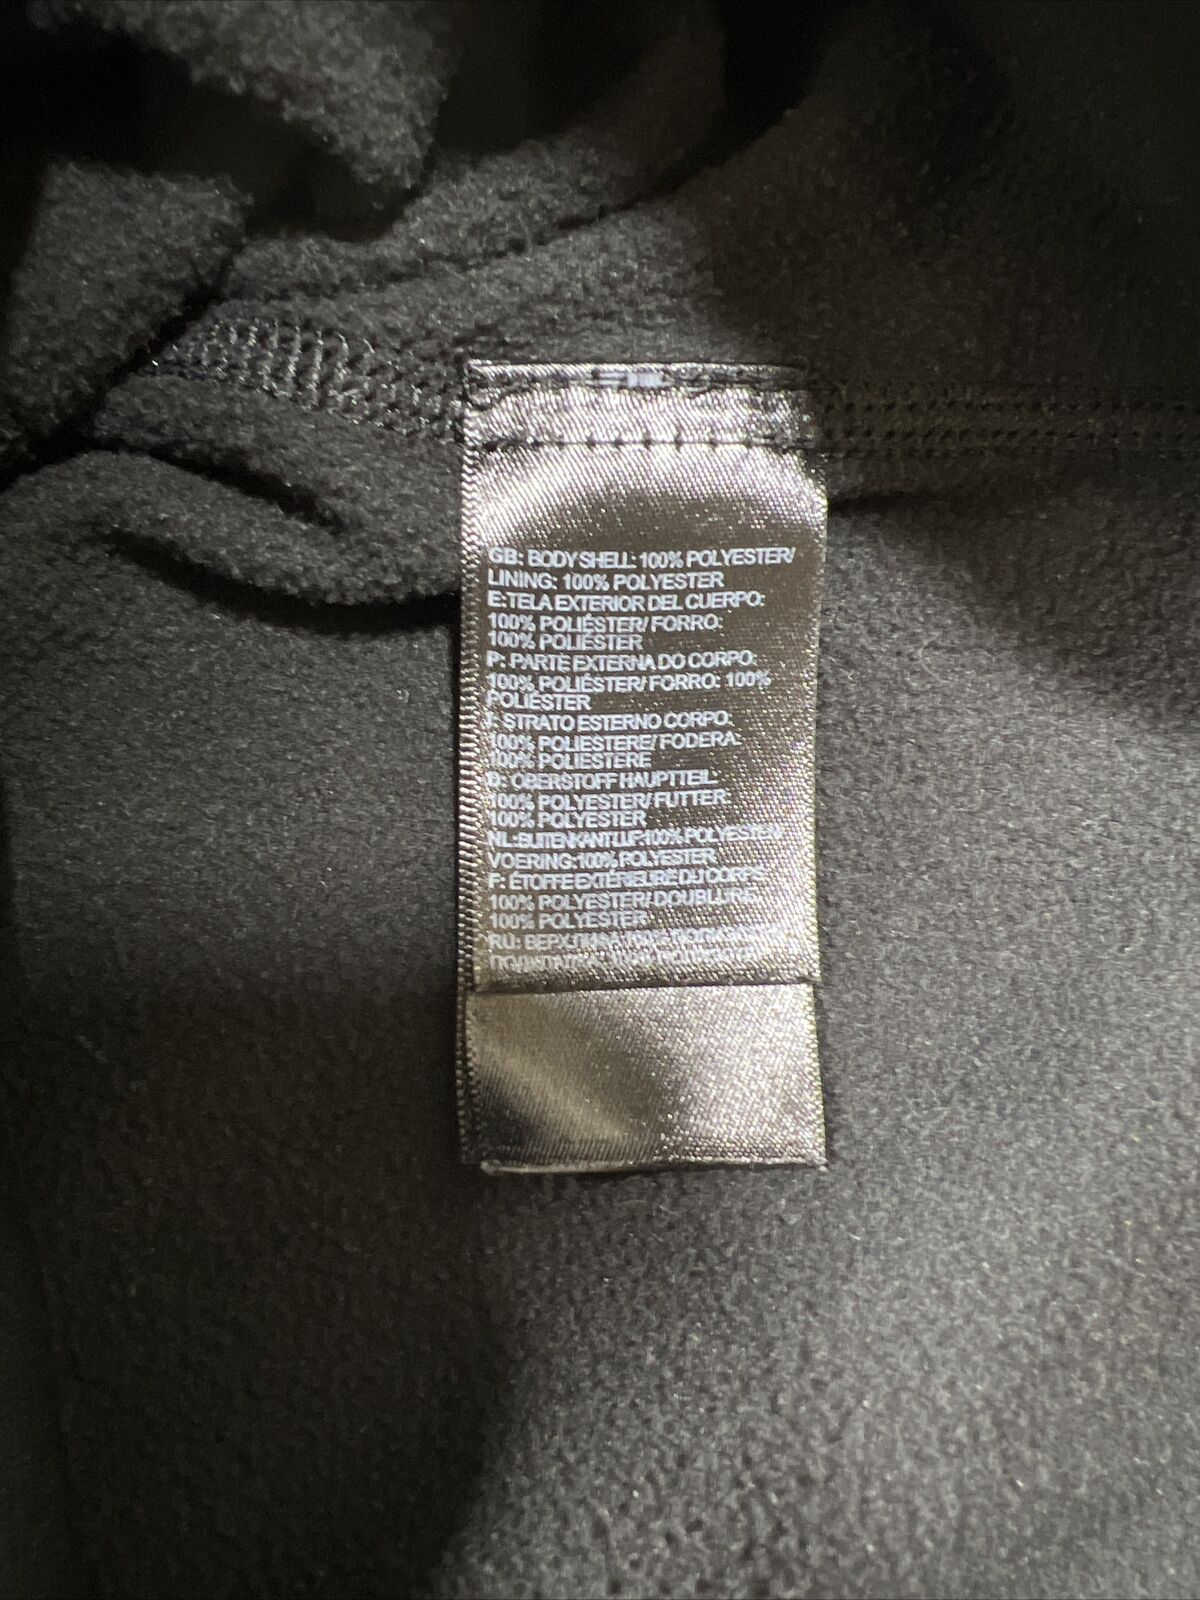 The North Face Girls Black Long Sleeve Full Zip Fleece Jacket - XL